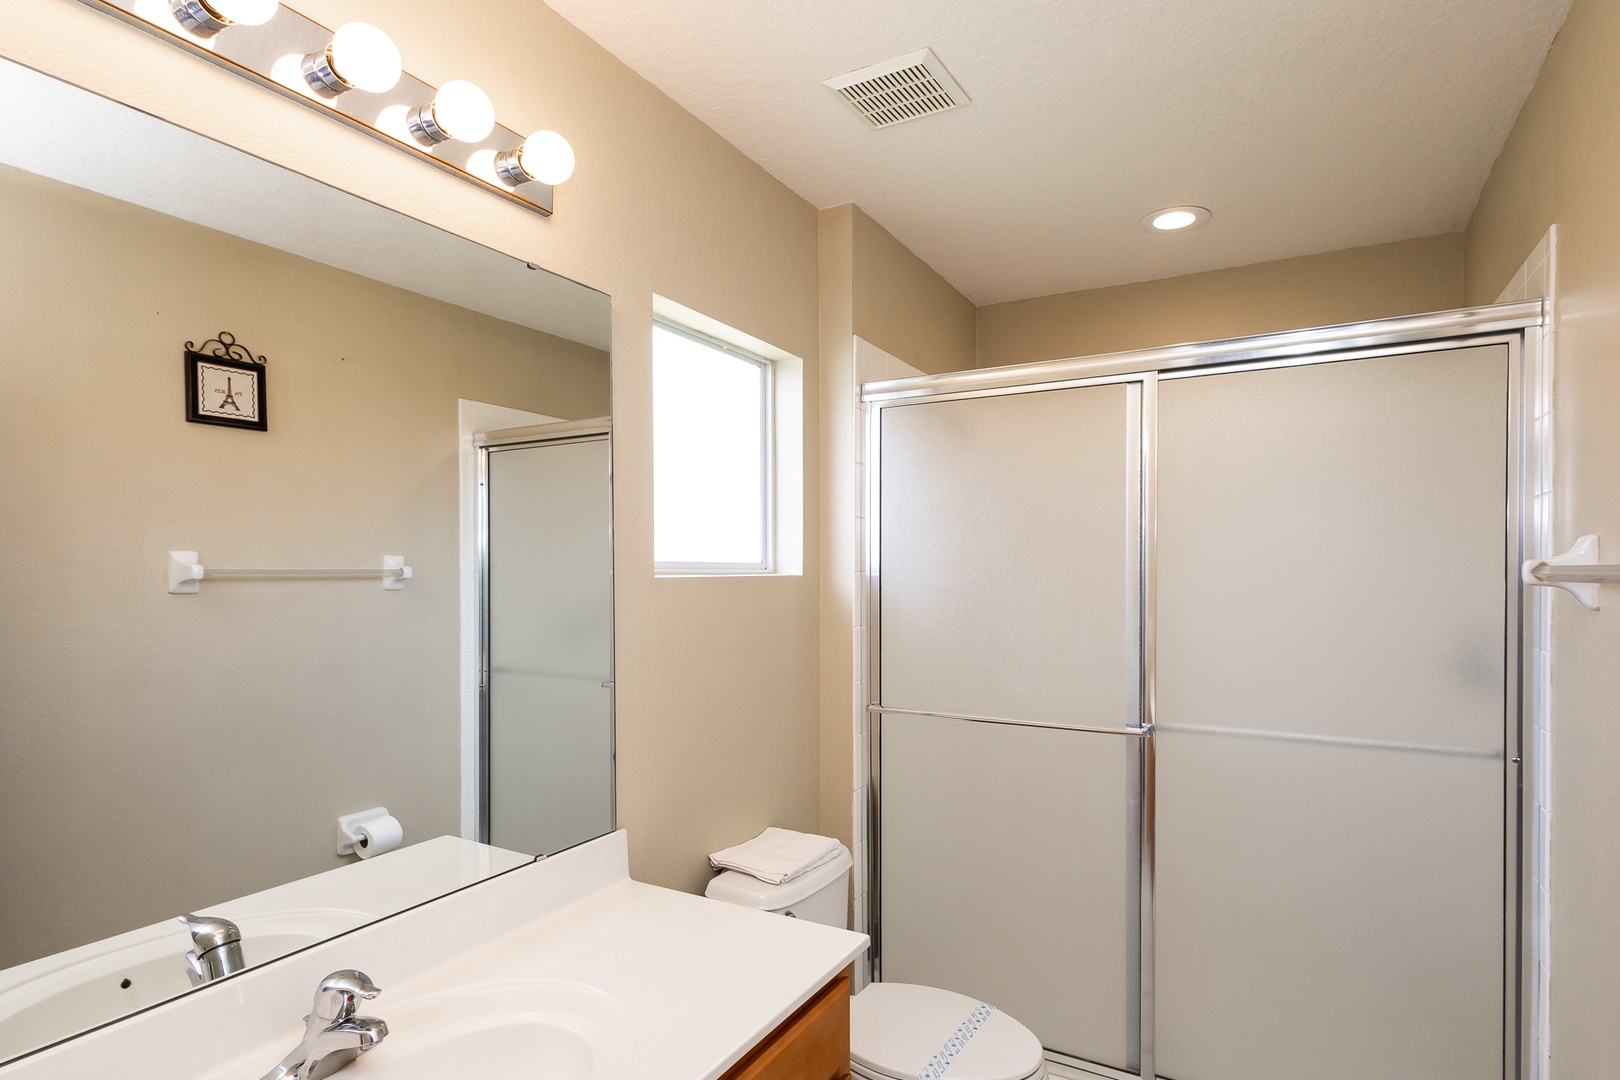 This queen en suite bathroom includes a single vanity & glass shower